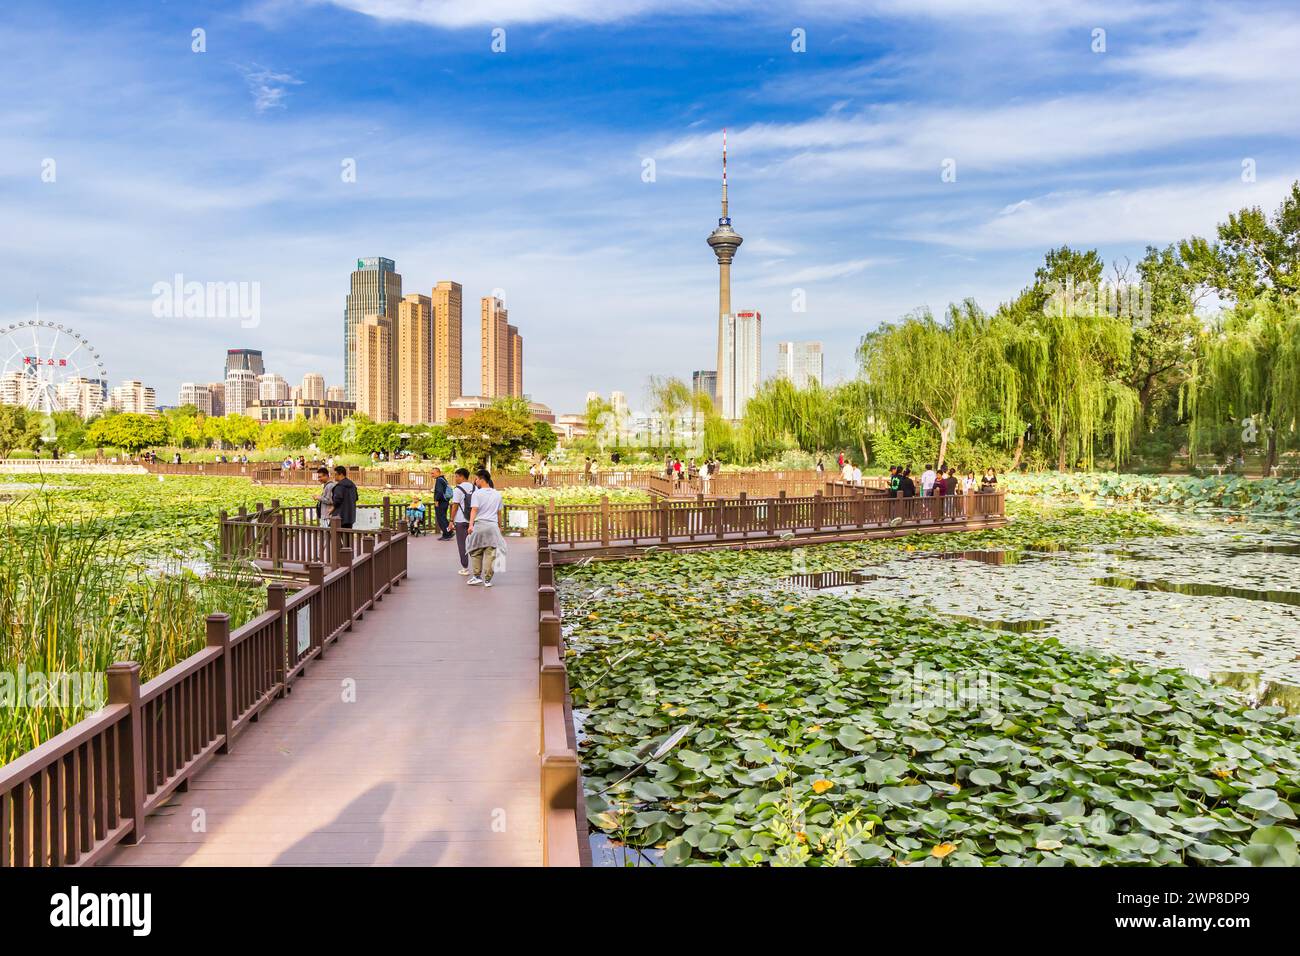 Promenade im Seerosenteich von Shuishang Park, Tianjin, China Stockfoto